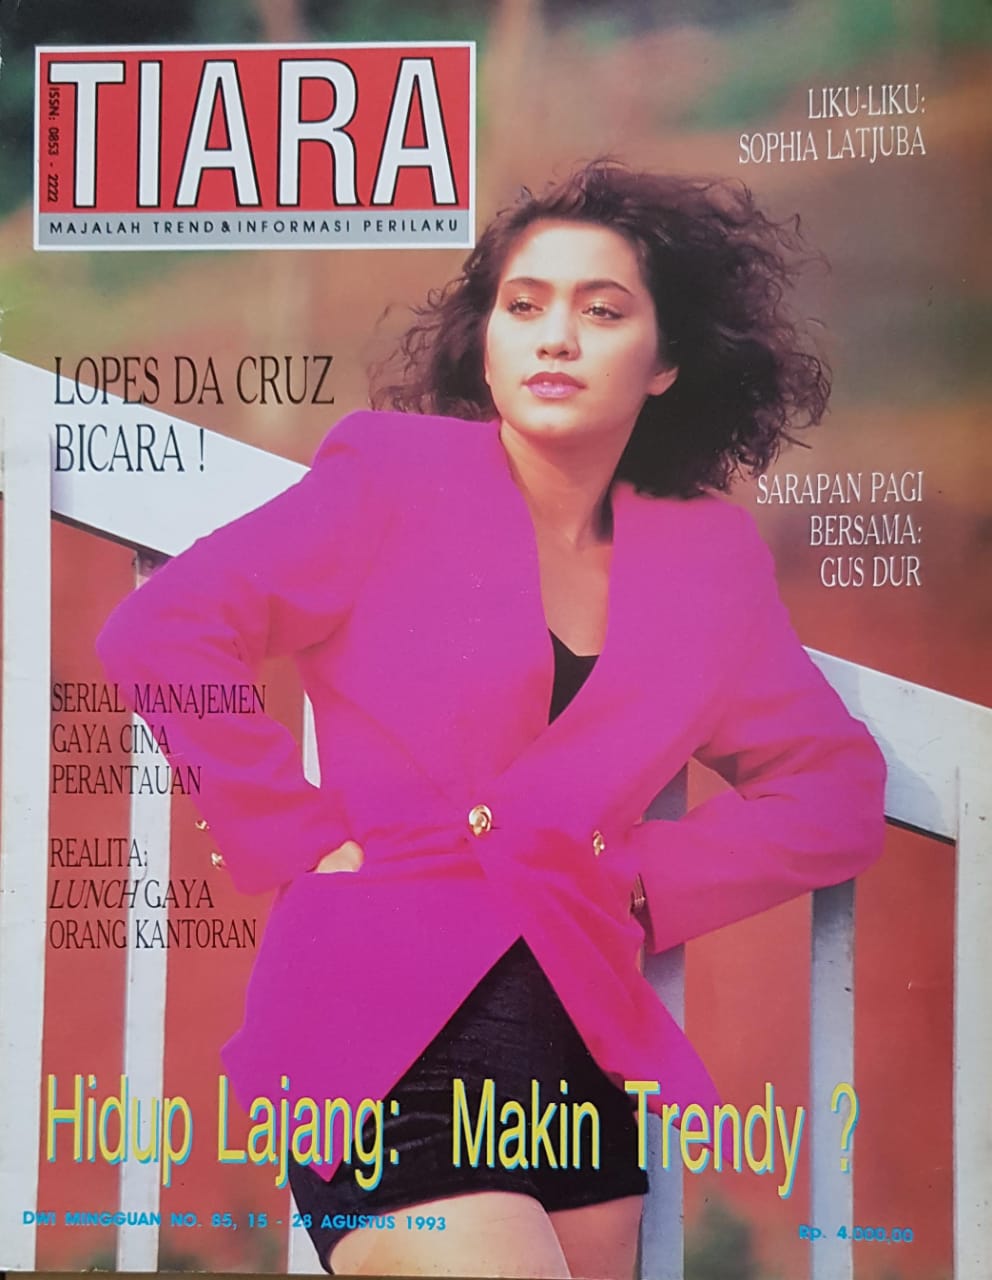 Tiara, 15 Agustus 1993